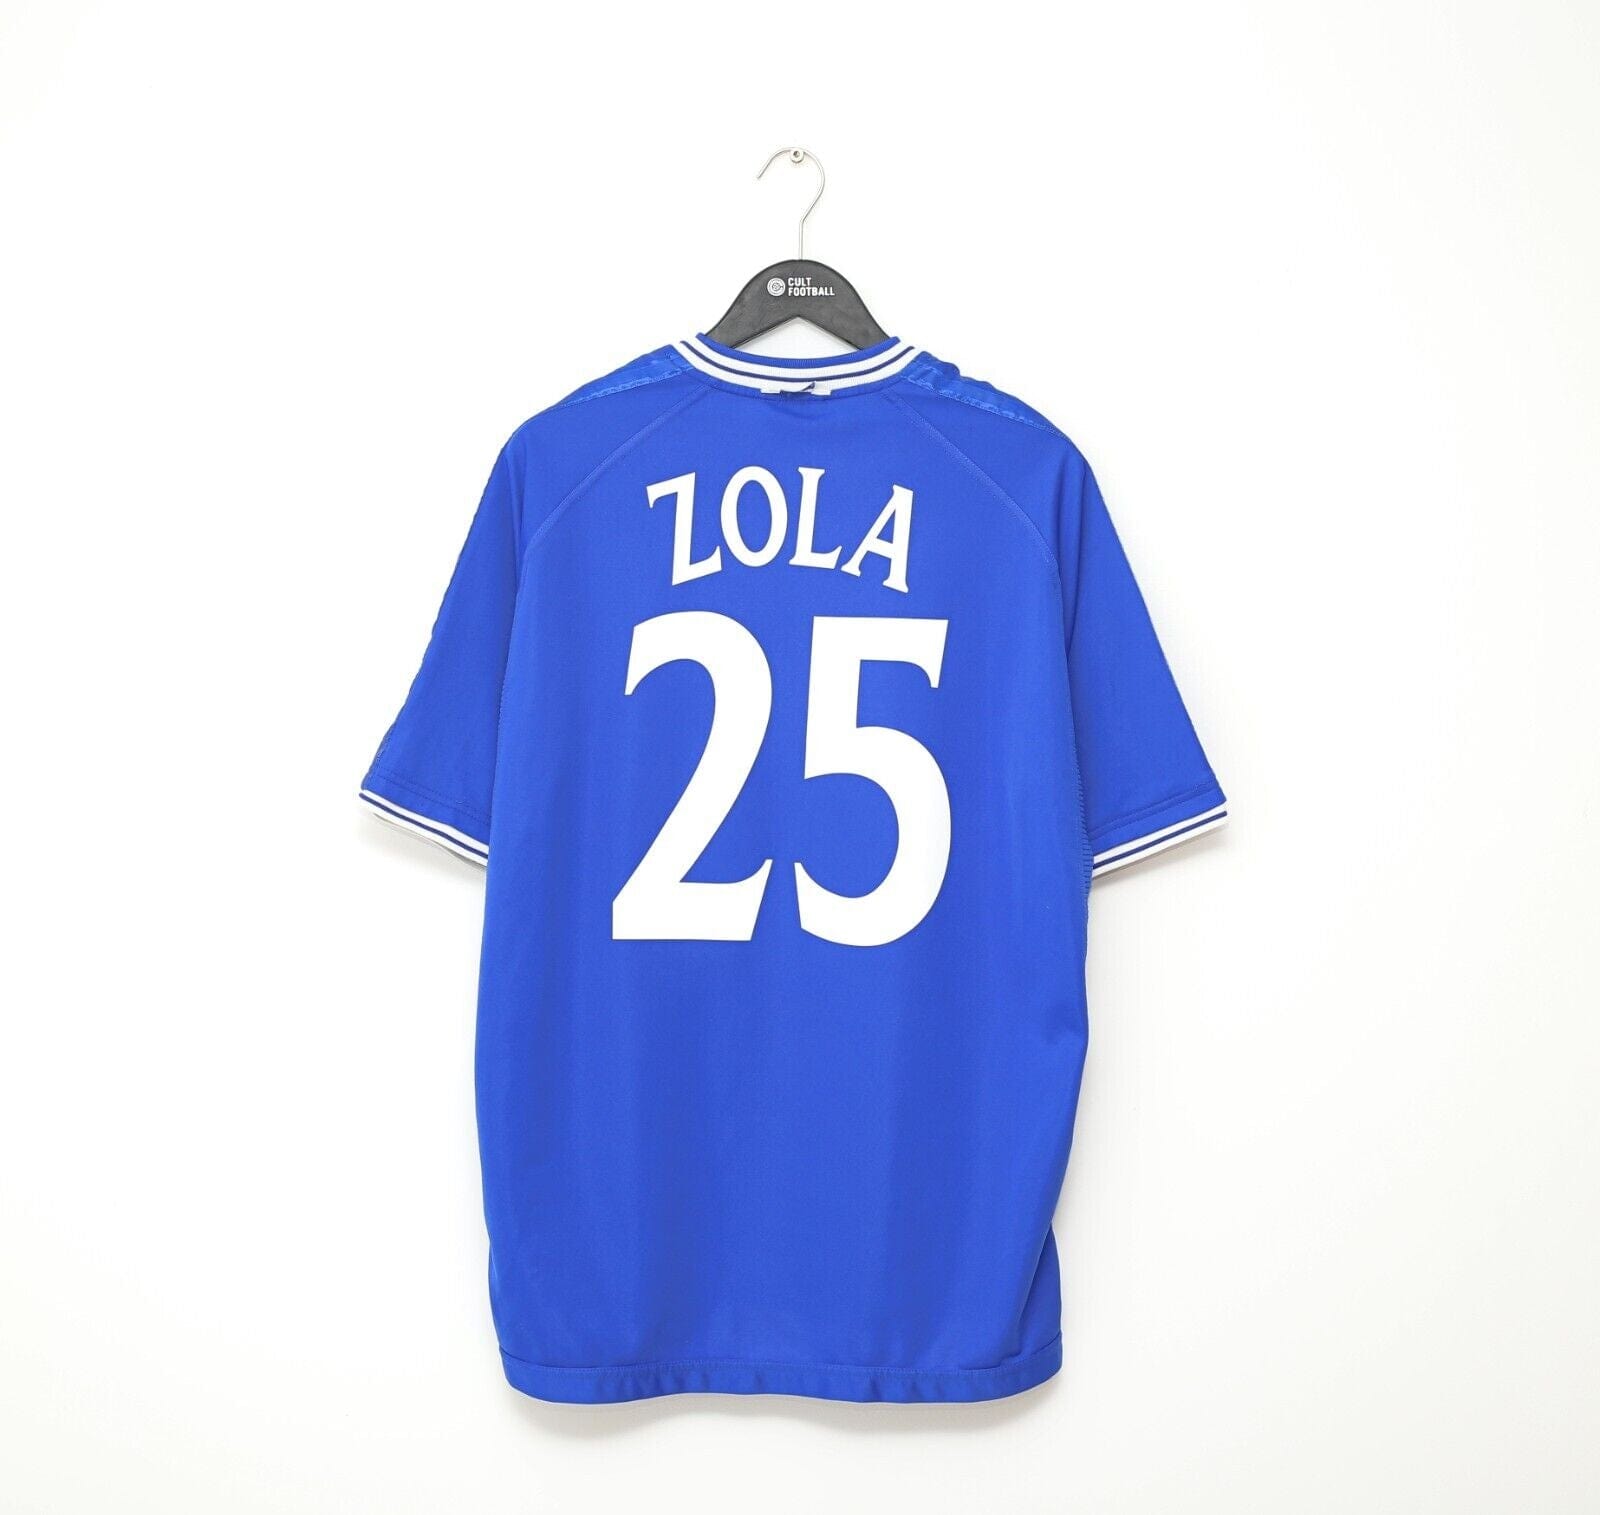 1999/01 ZOLA #25 Chelsea Vintage Umbro UCL Football Shirt (XL)